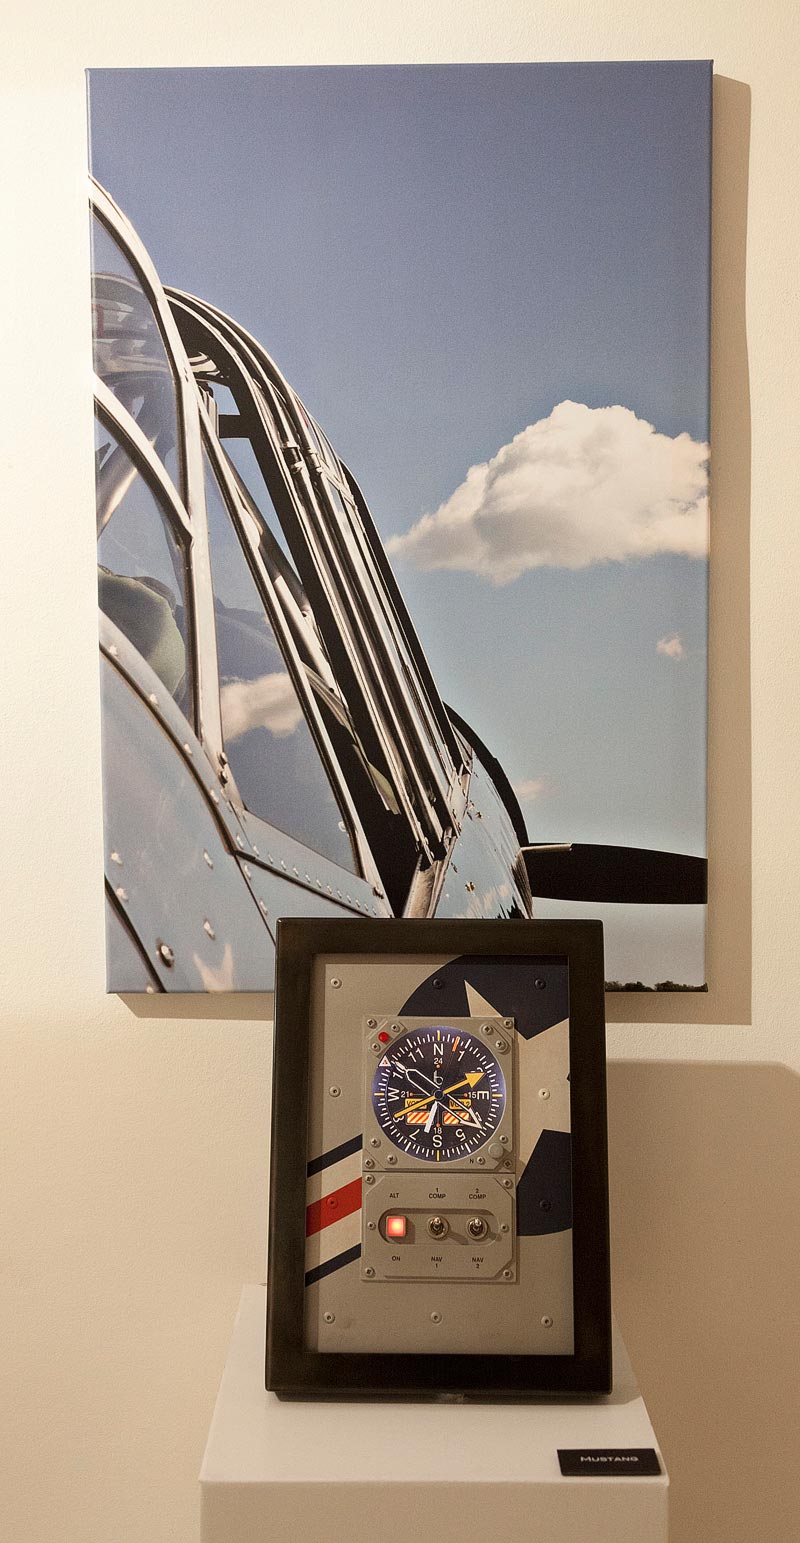  - <b>Mustang</b> - Collection Horloge de Bord <br>Dim. : 33.5 x 24.5 x 4 cm